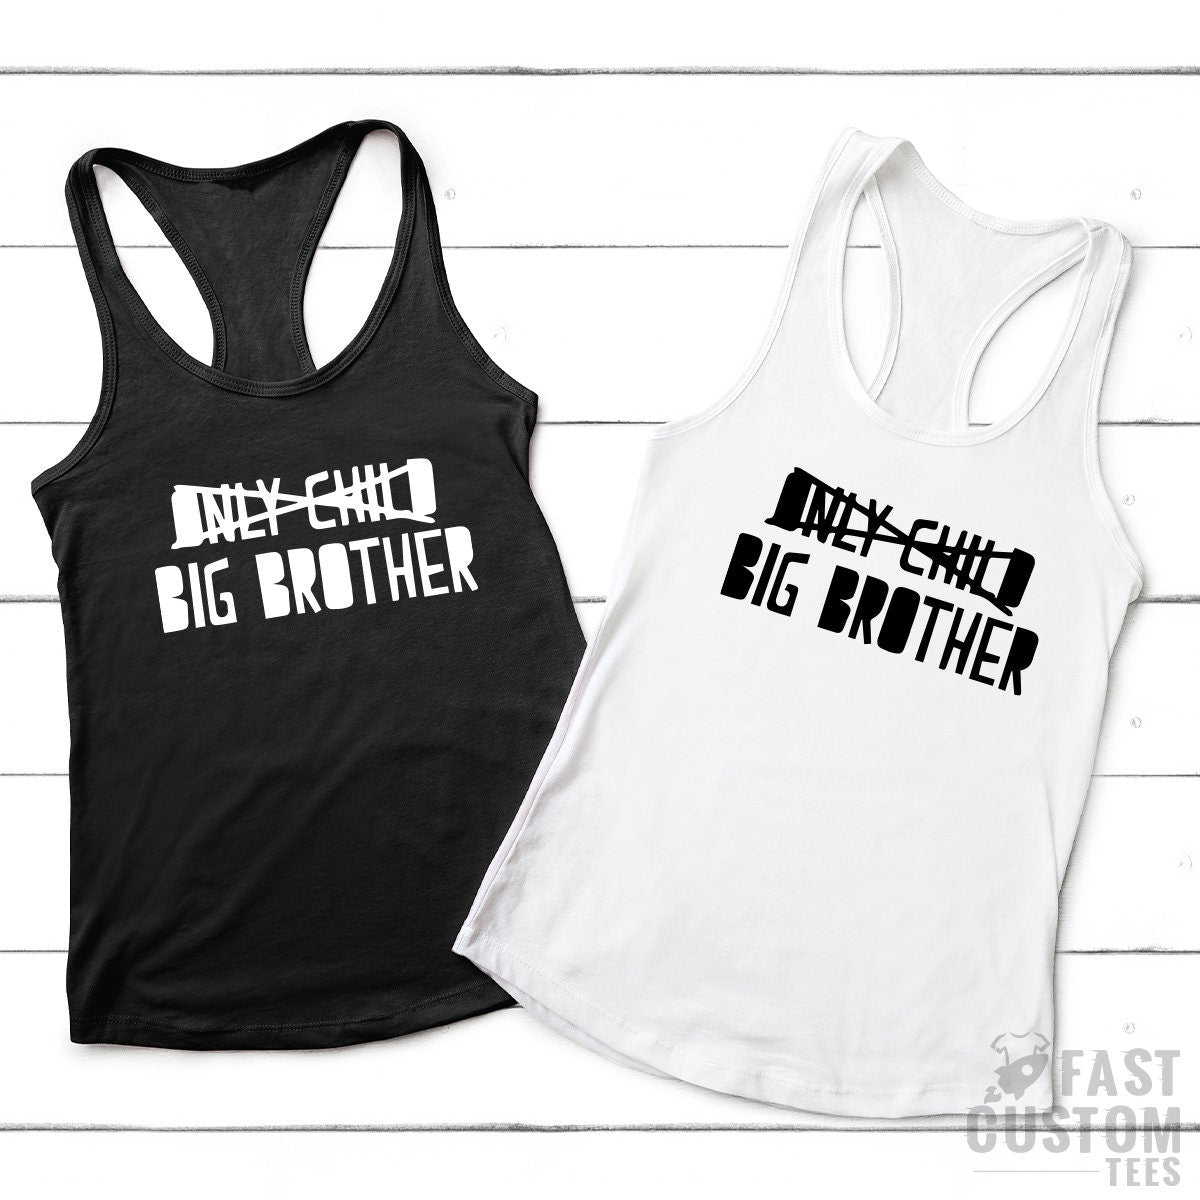 Little Brother TShirt, New Big Brother Shirts, Big Brother Shirt, Baby Announcement Tee, Shirt For Big Brother, Custom Brother Shirt - Fastdeliverytees.com